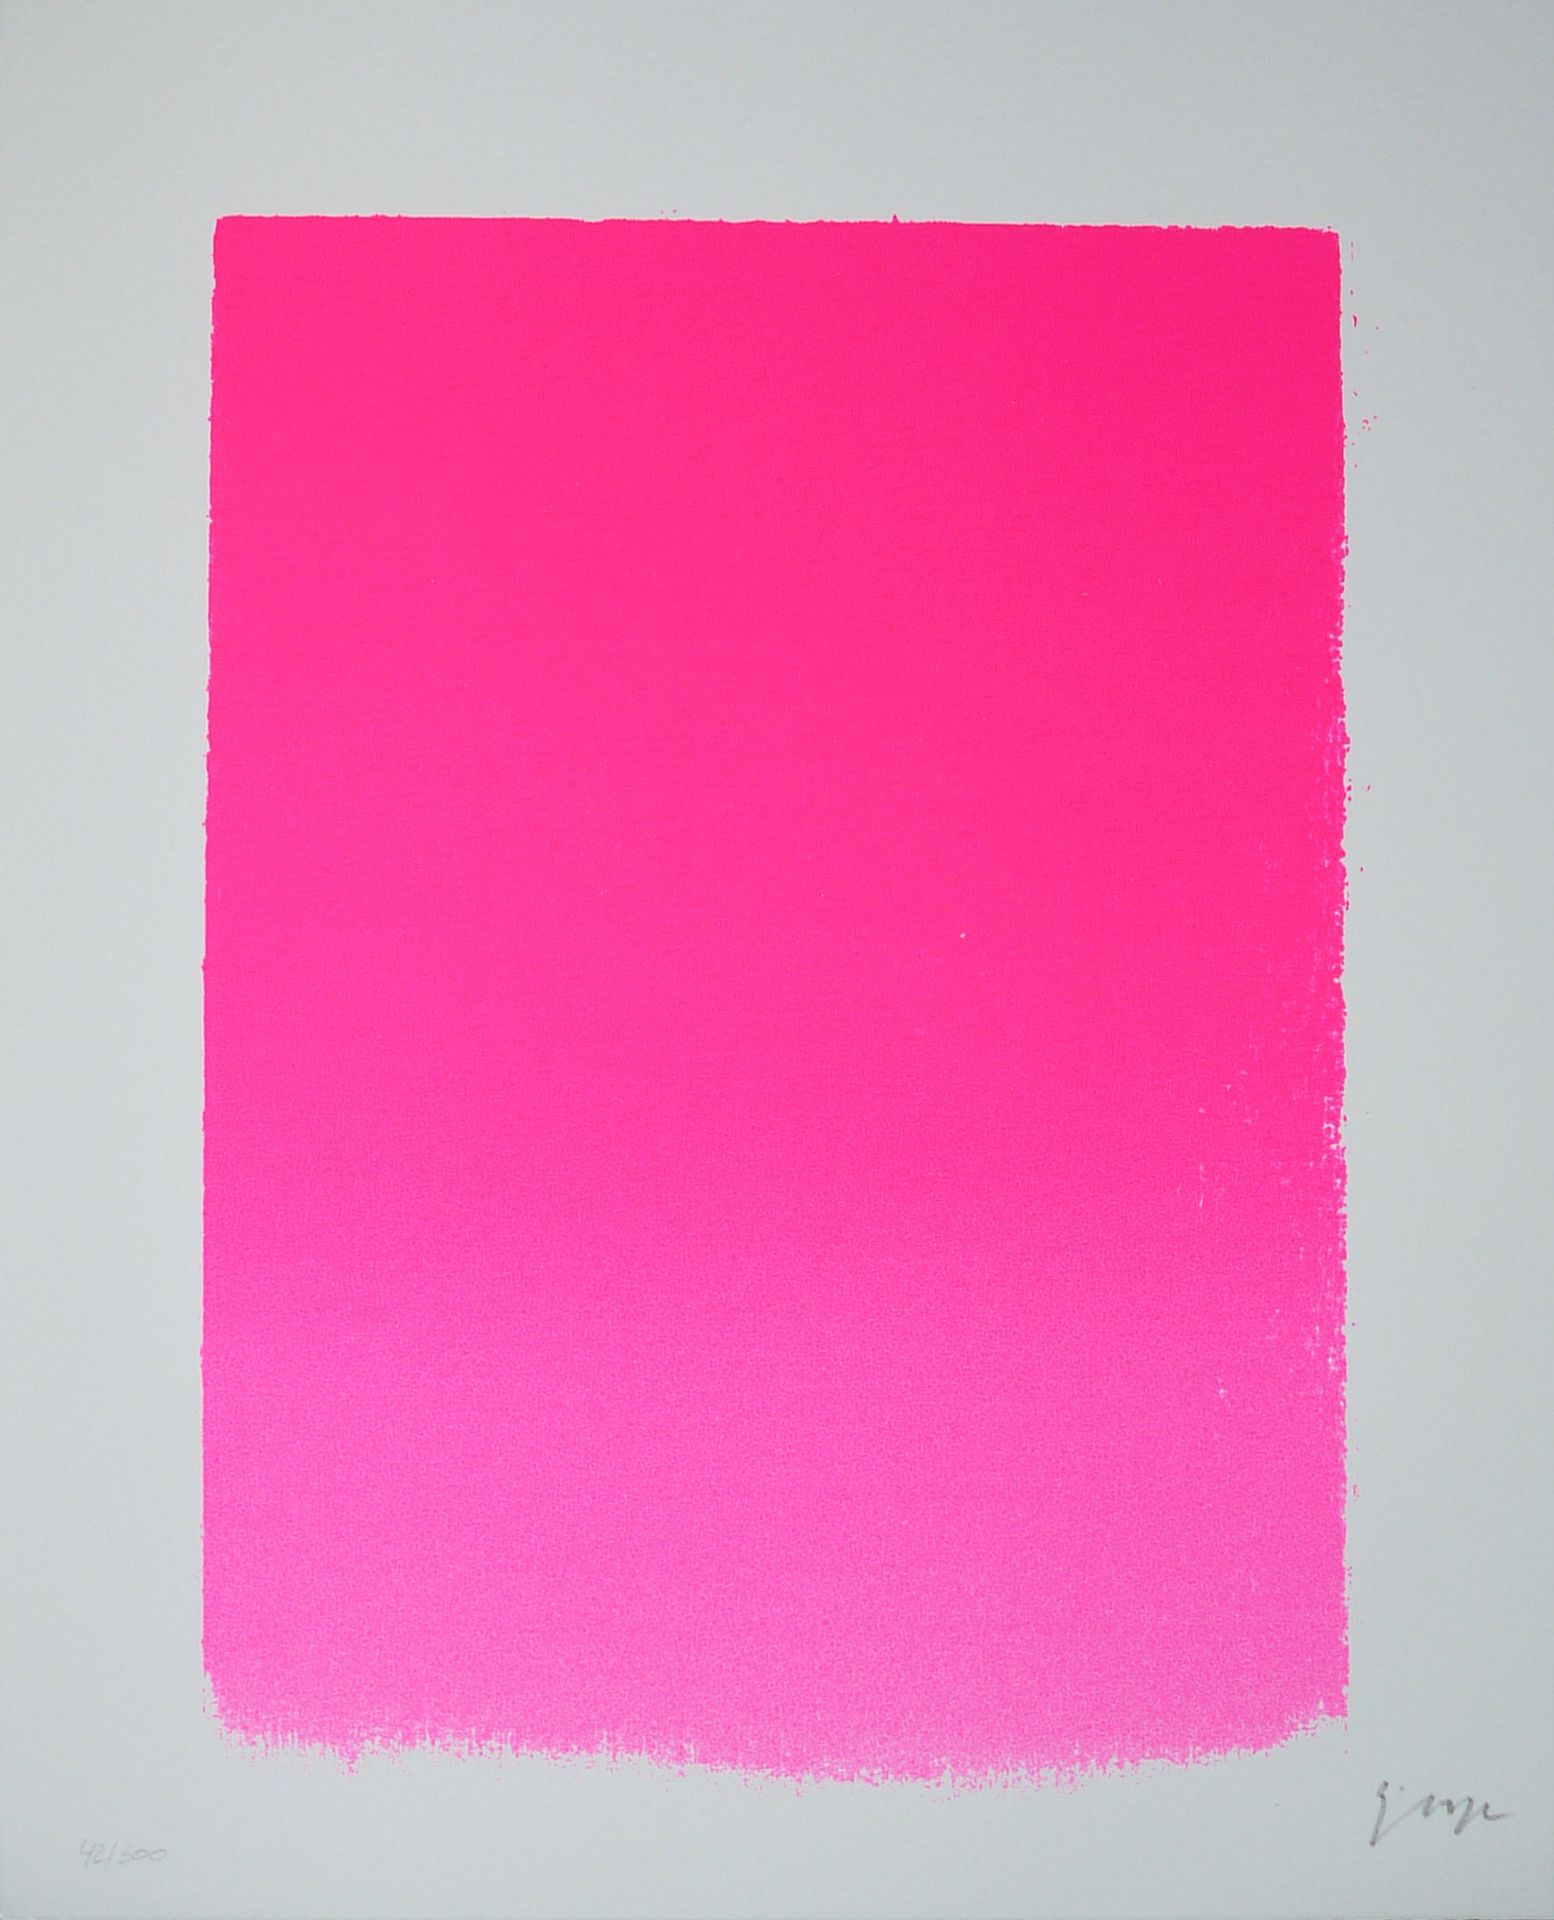 Rupprecht Geiger, Neon-Pink, Farbserigrafie, 1966